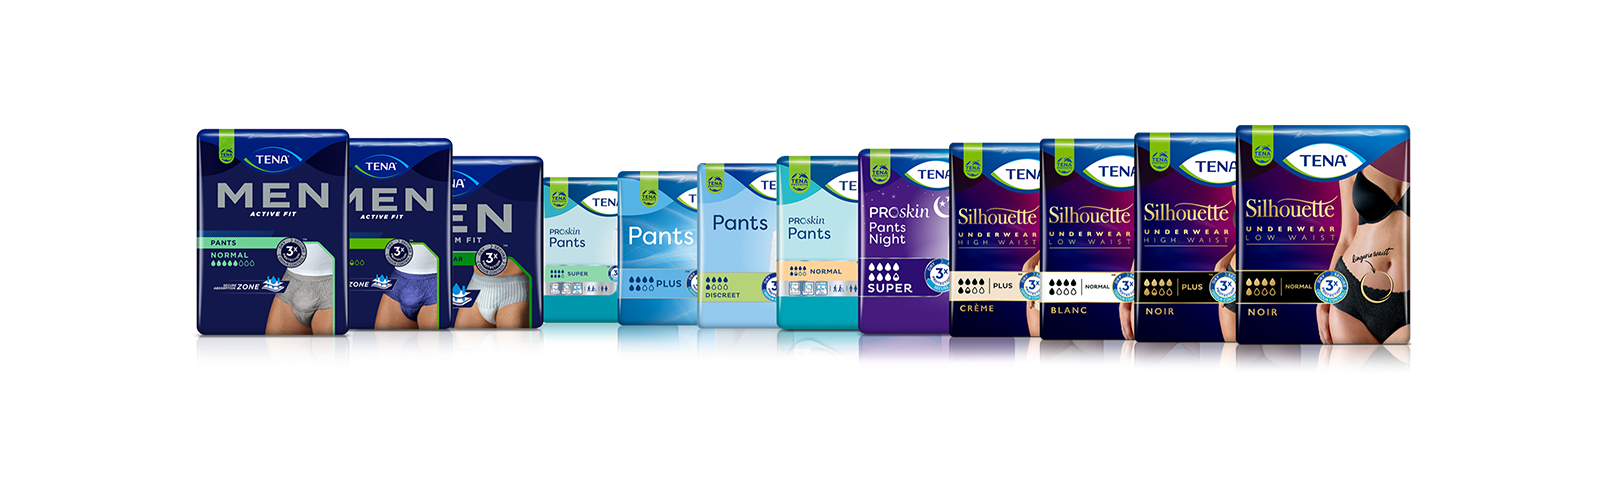 TENA-TPW-Xmen-Pharma-Pants-Range-Overview-1600x500px.png                                                                                                                                                                                                                                                                                                                                                                                                                                                            